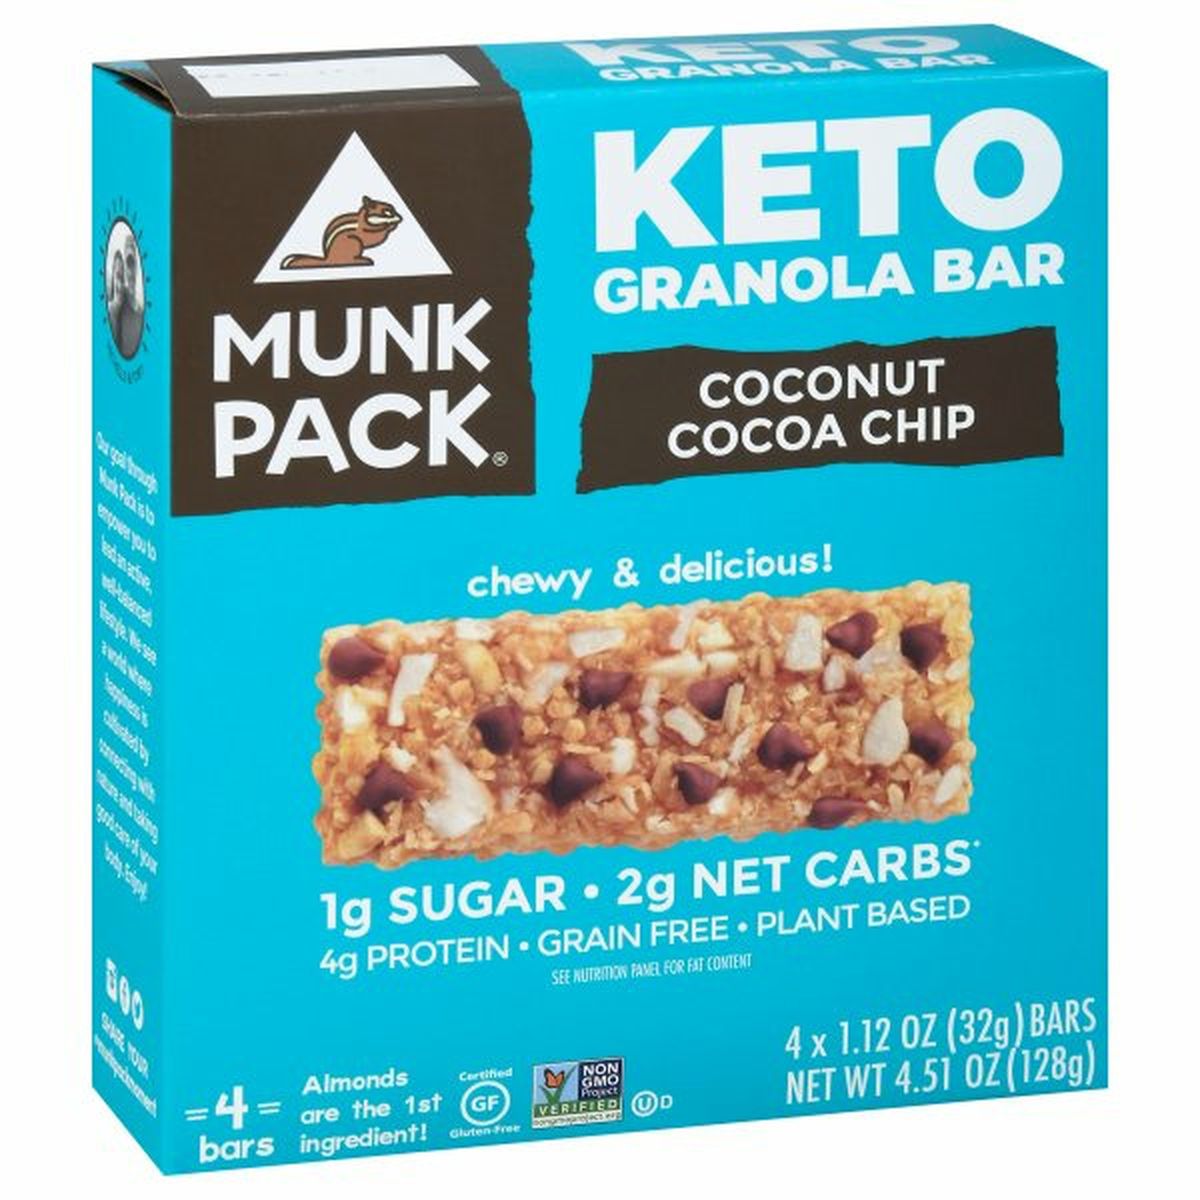 Calories in Munk Pack Granola Bar, Keto, Coconut Cocoa Chip